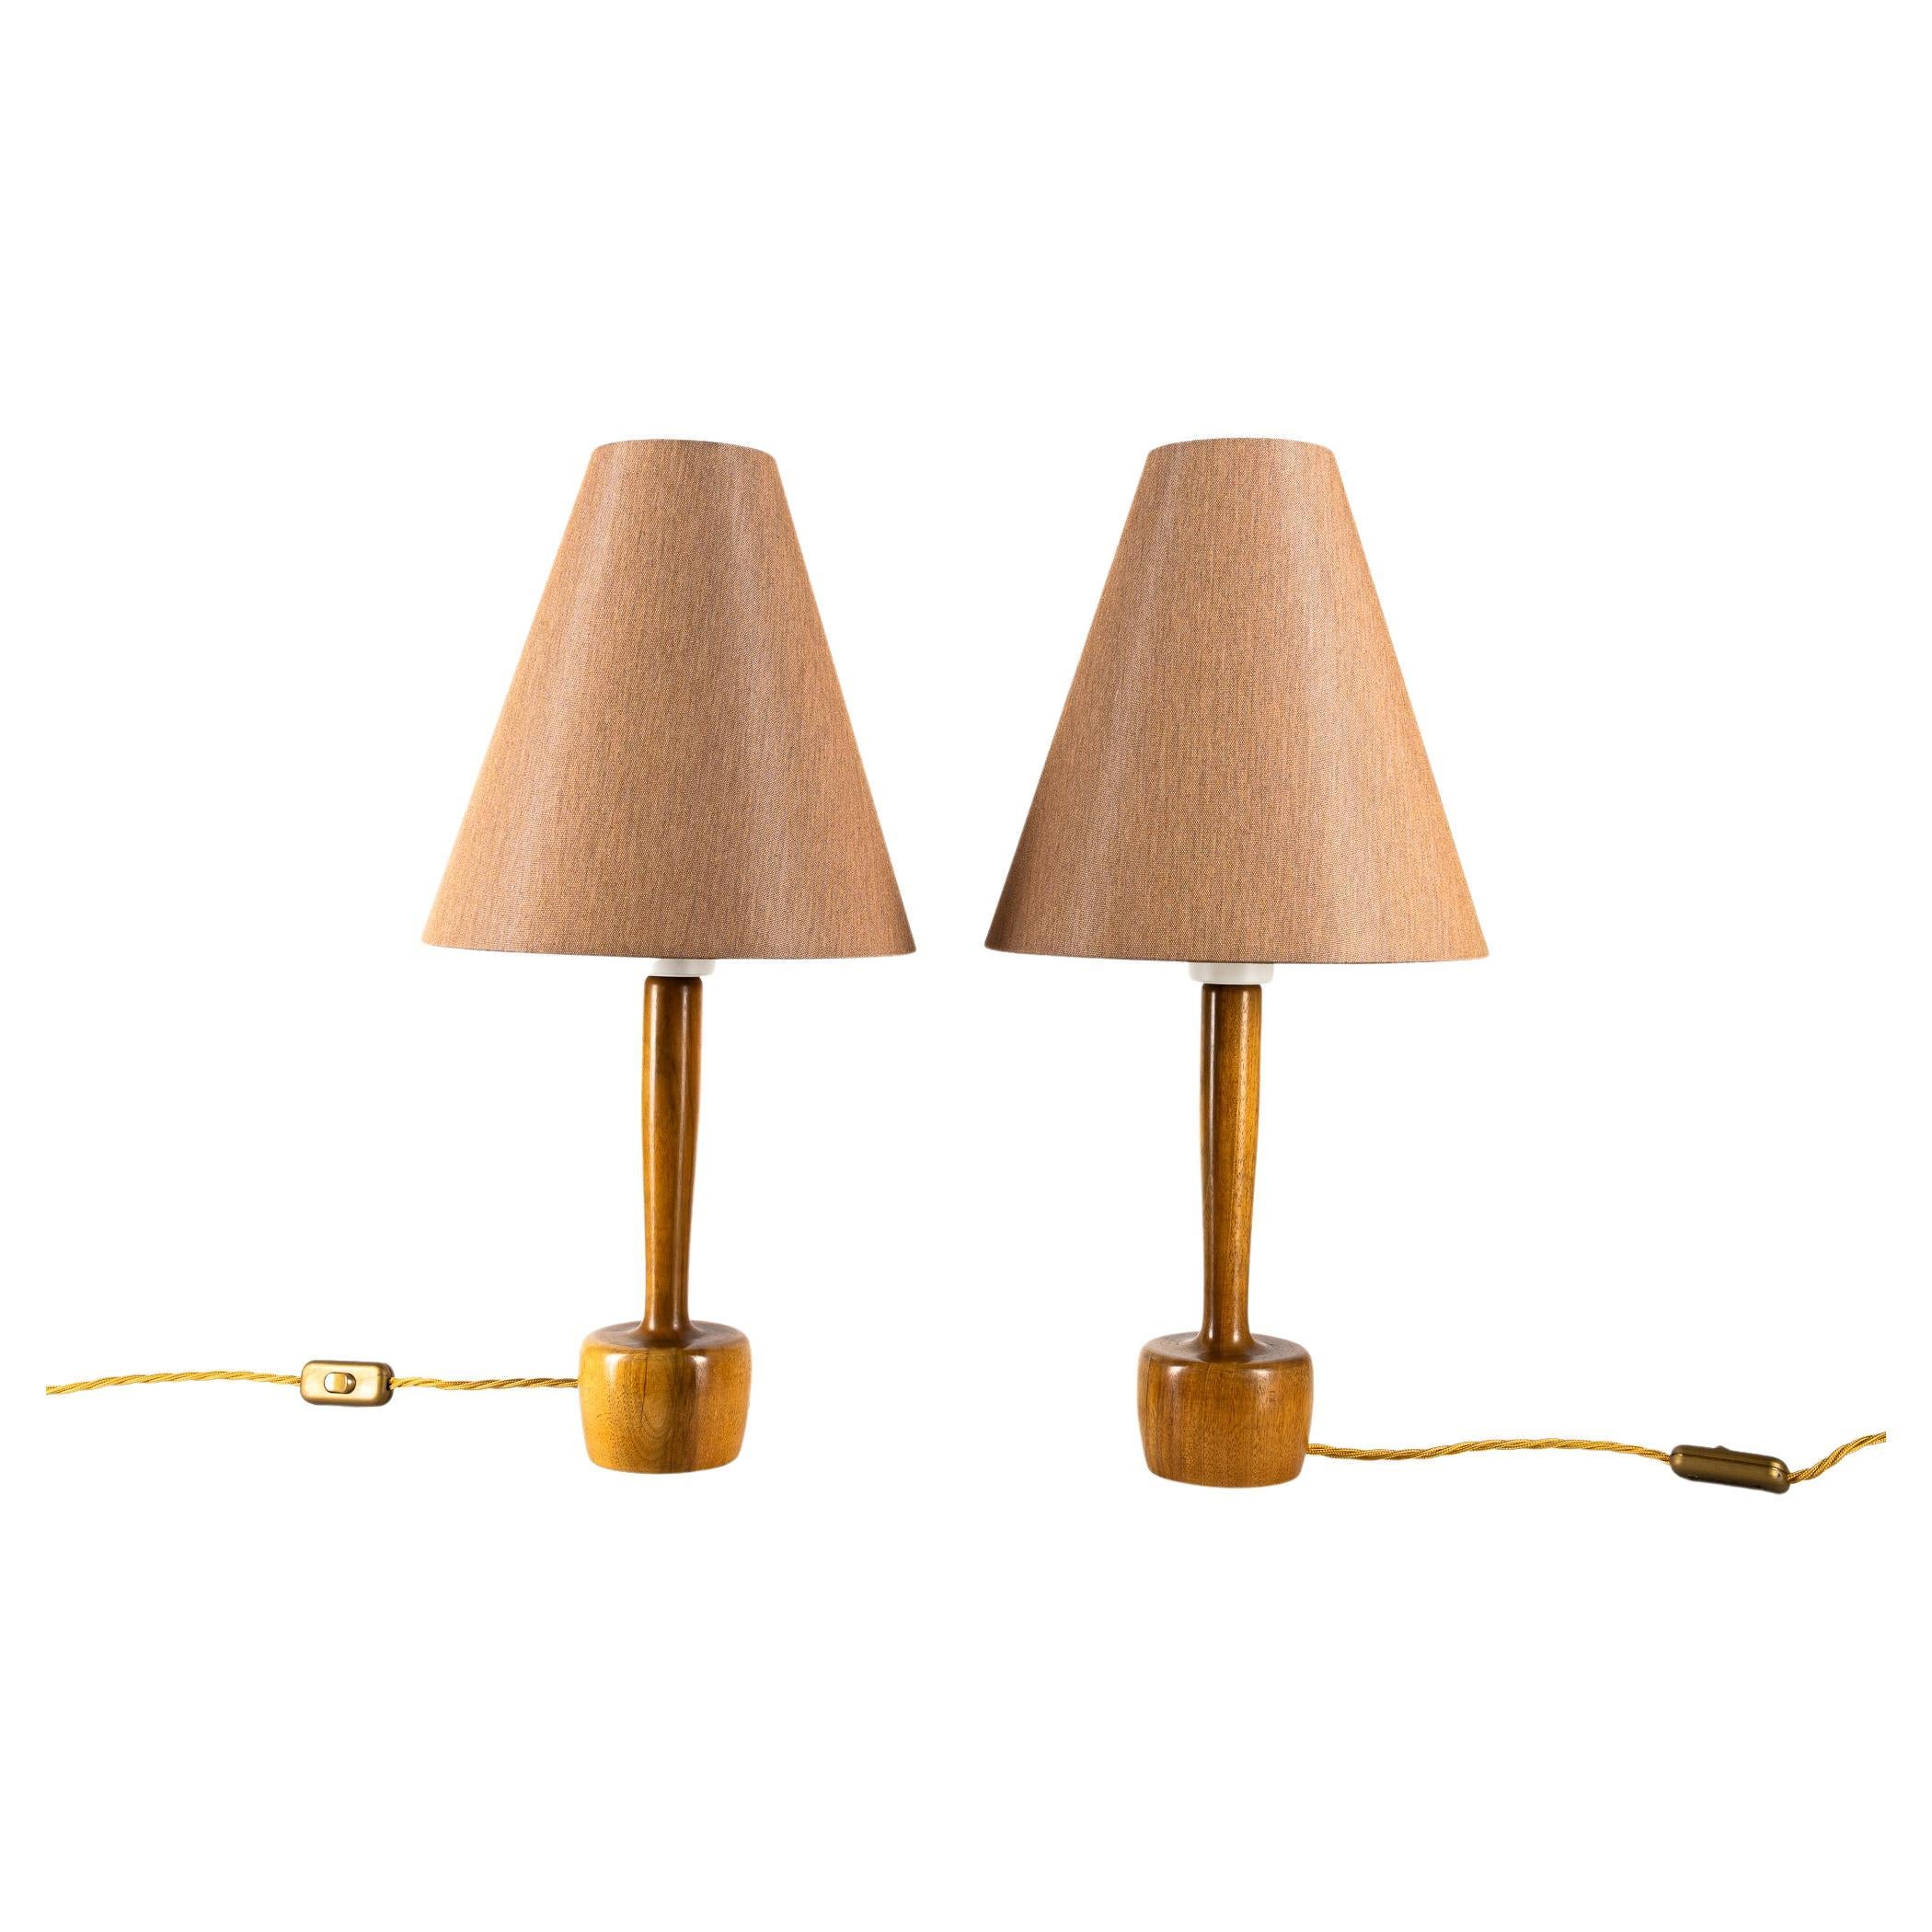 2 Rupert Nikoll Wood Table Lamps by Rupert Nikoll, Around 1950s